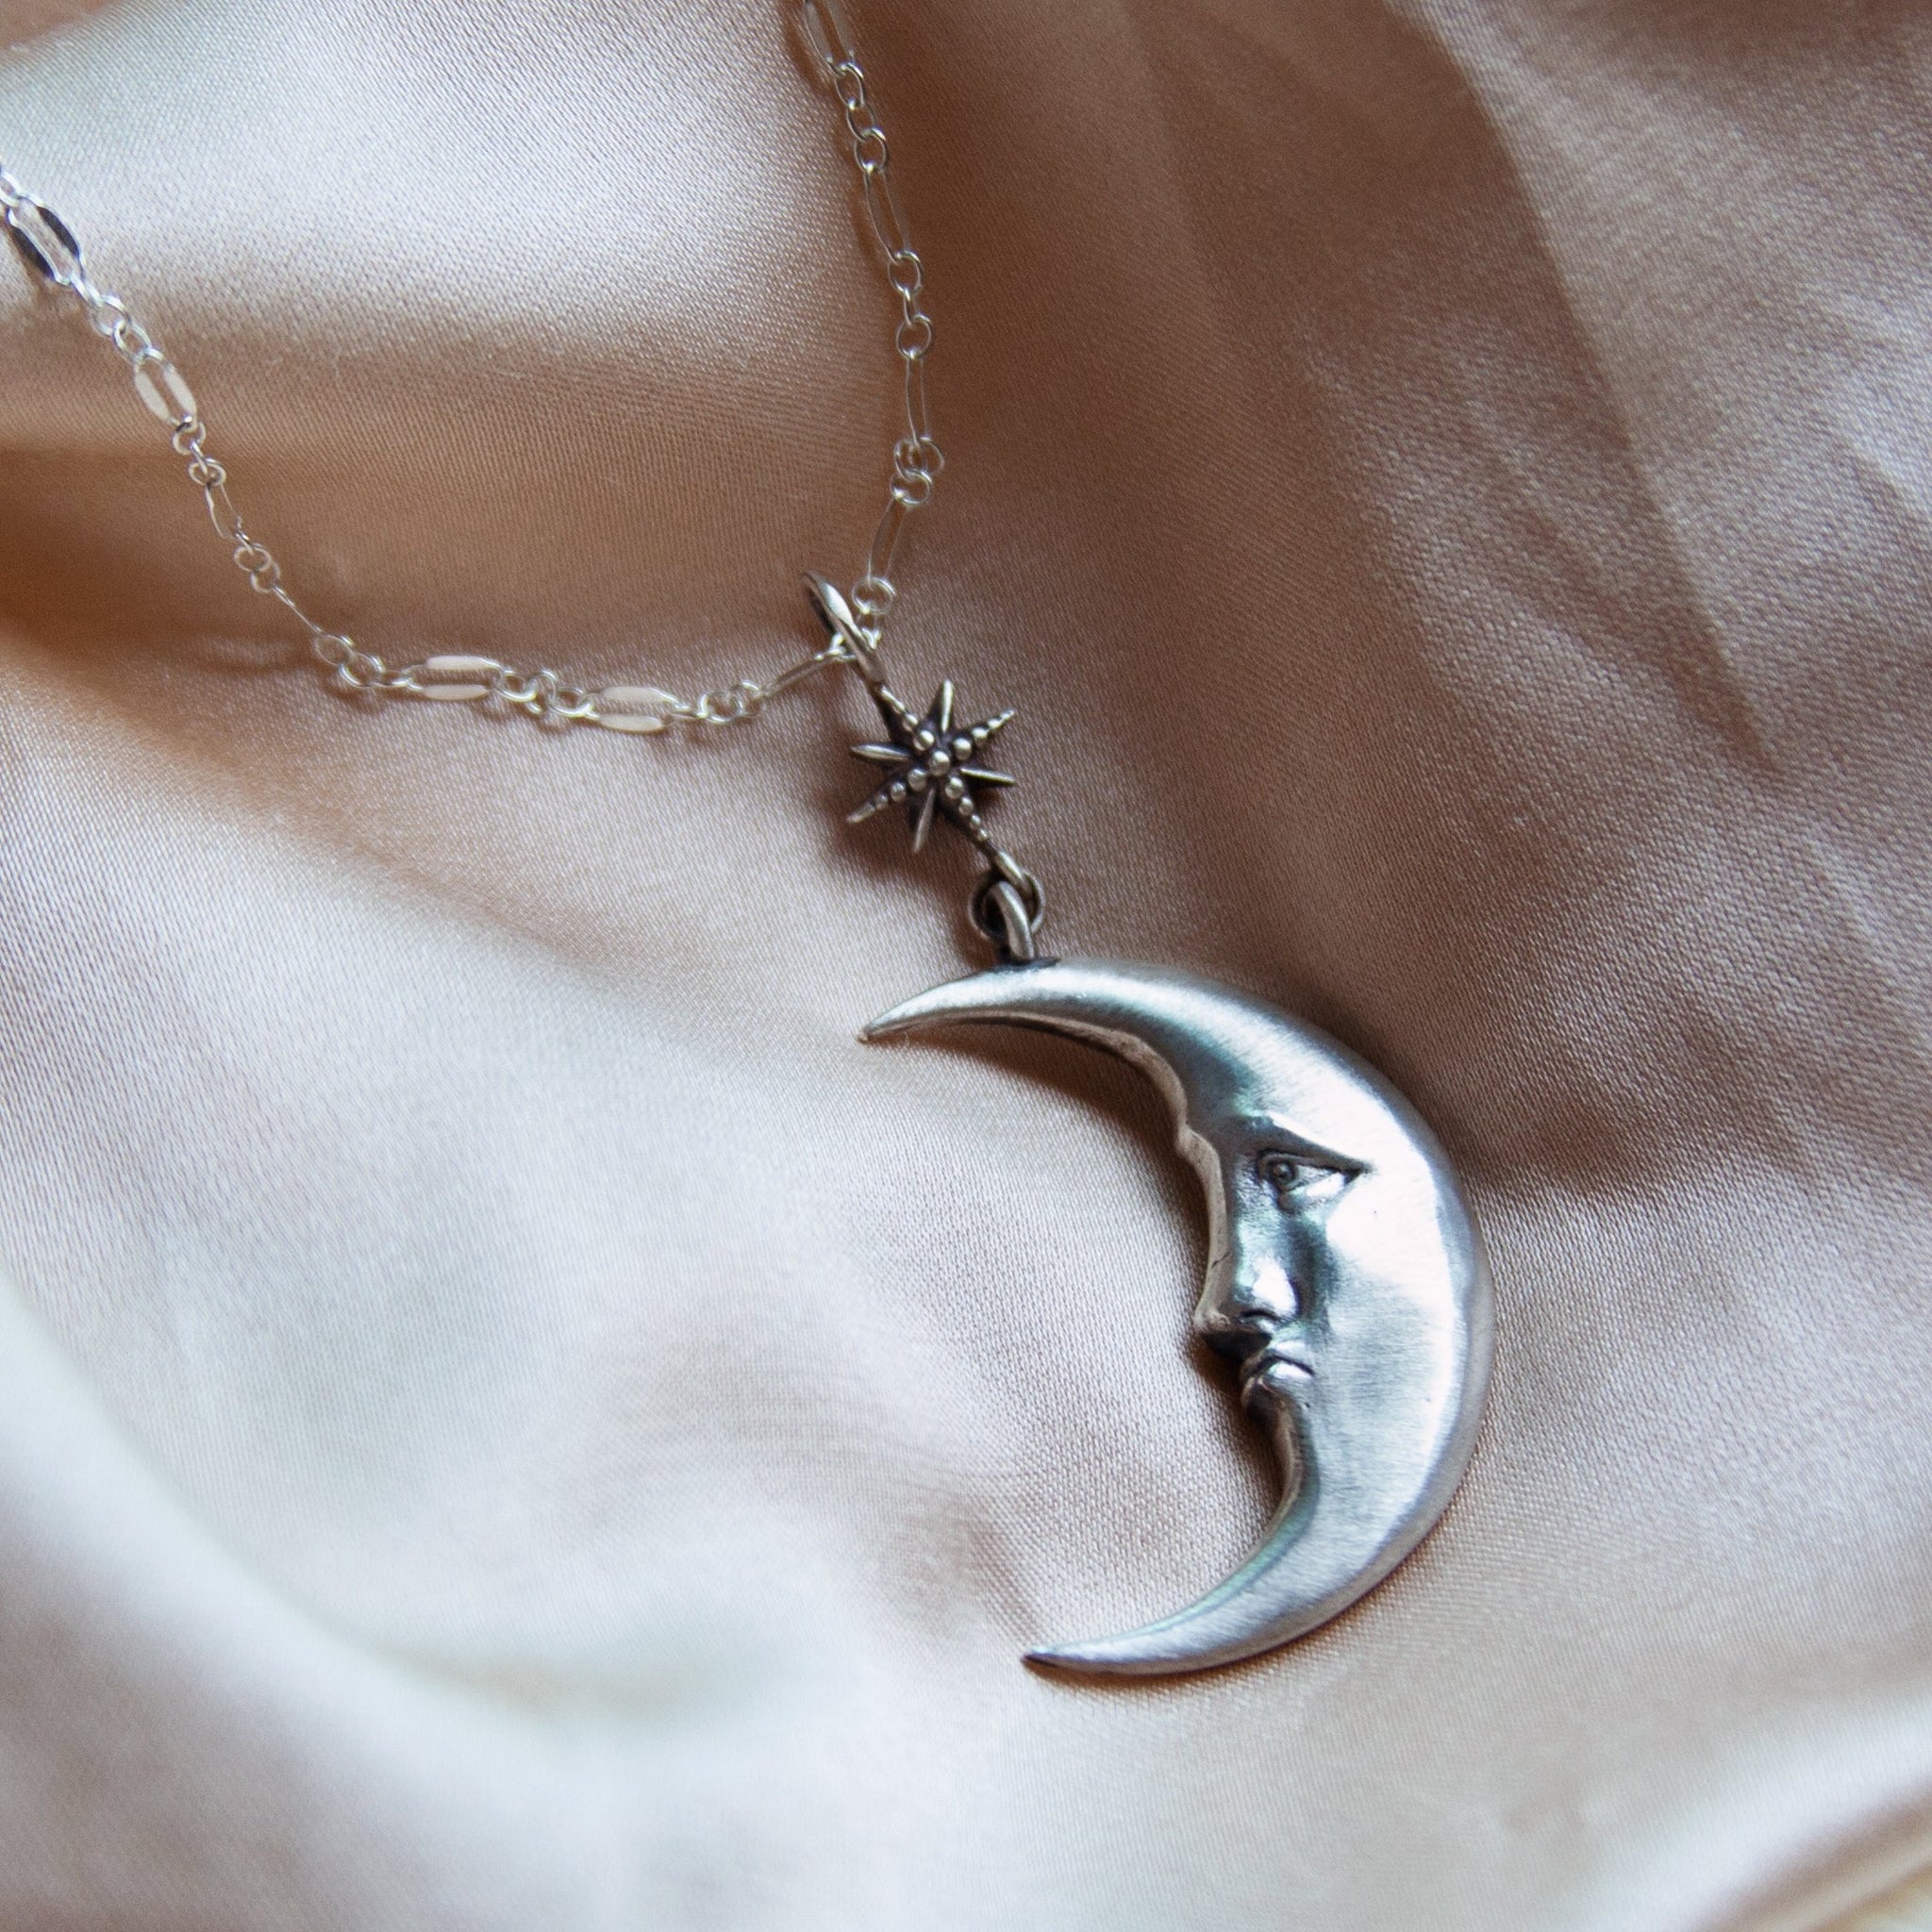 Dreamweaver necklace in sterling silver